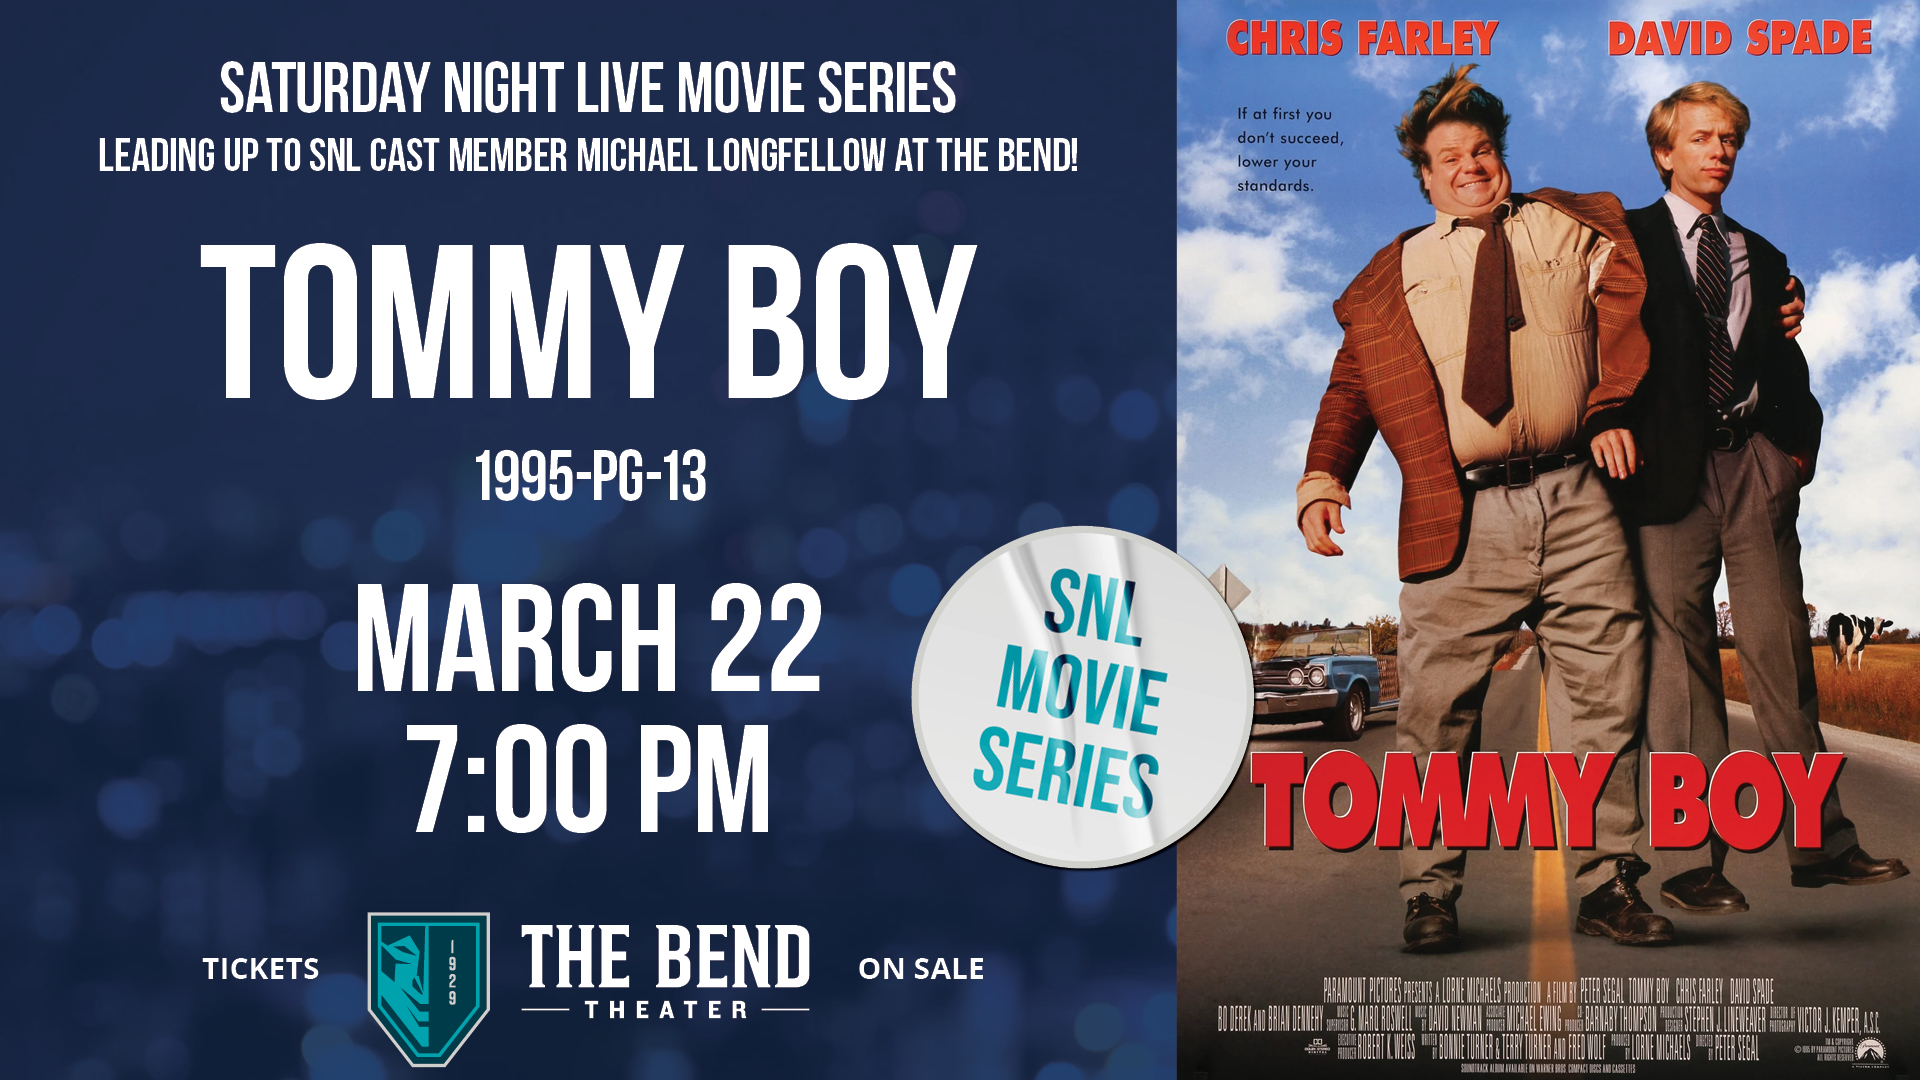 SNL Movie Series: Tommy Boy (1995 - PG-13)